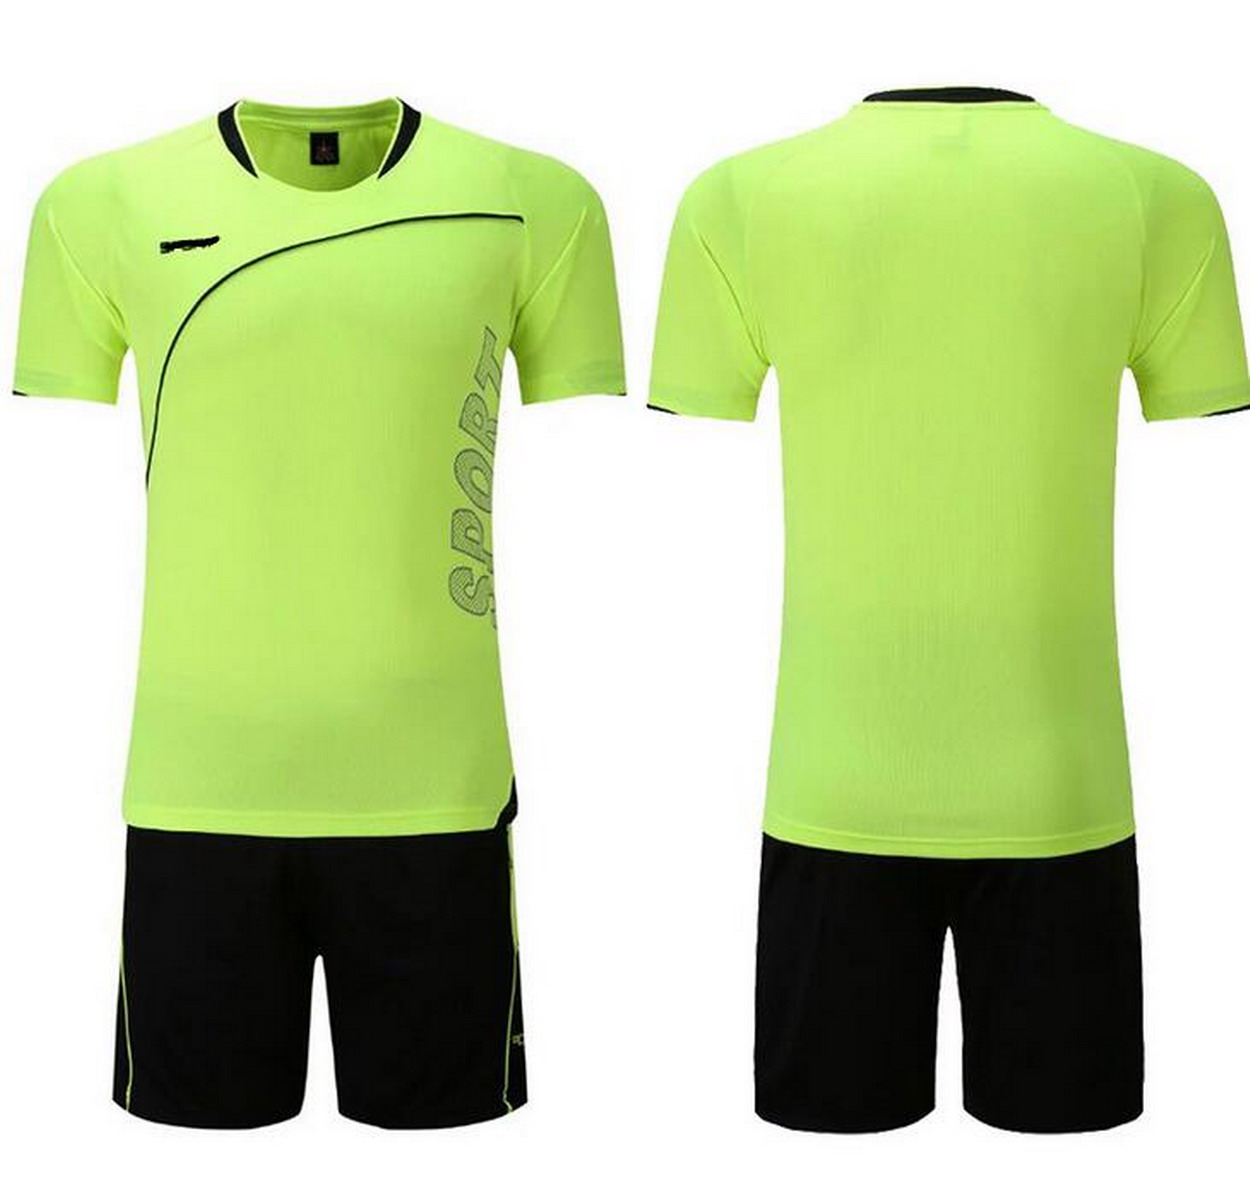 Children's sports clothing customized personalized sportswear quick-dry sportswear852212